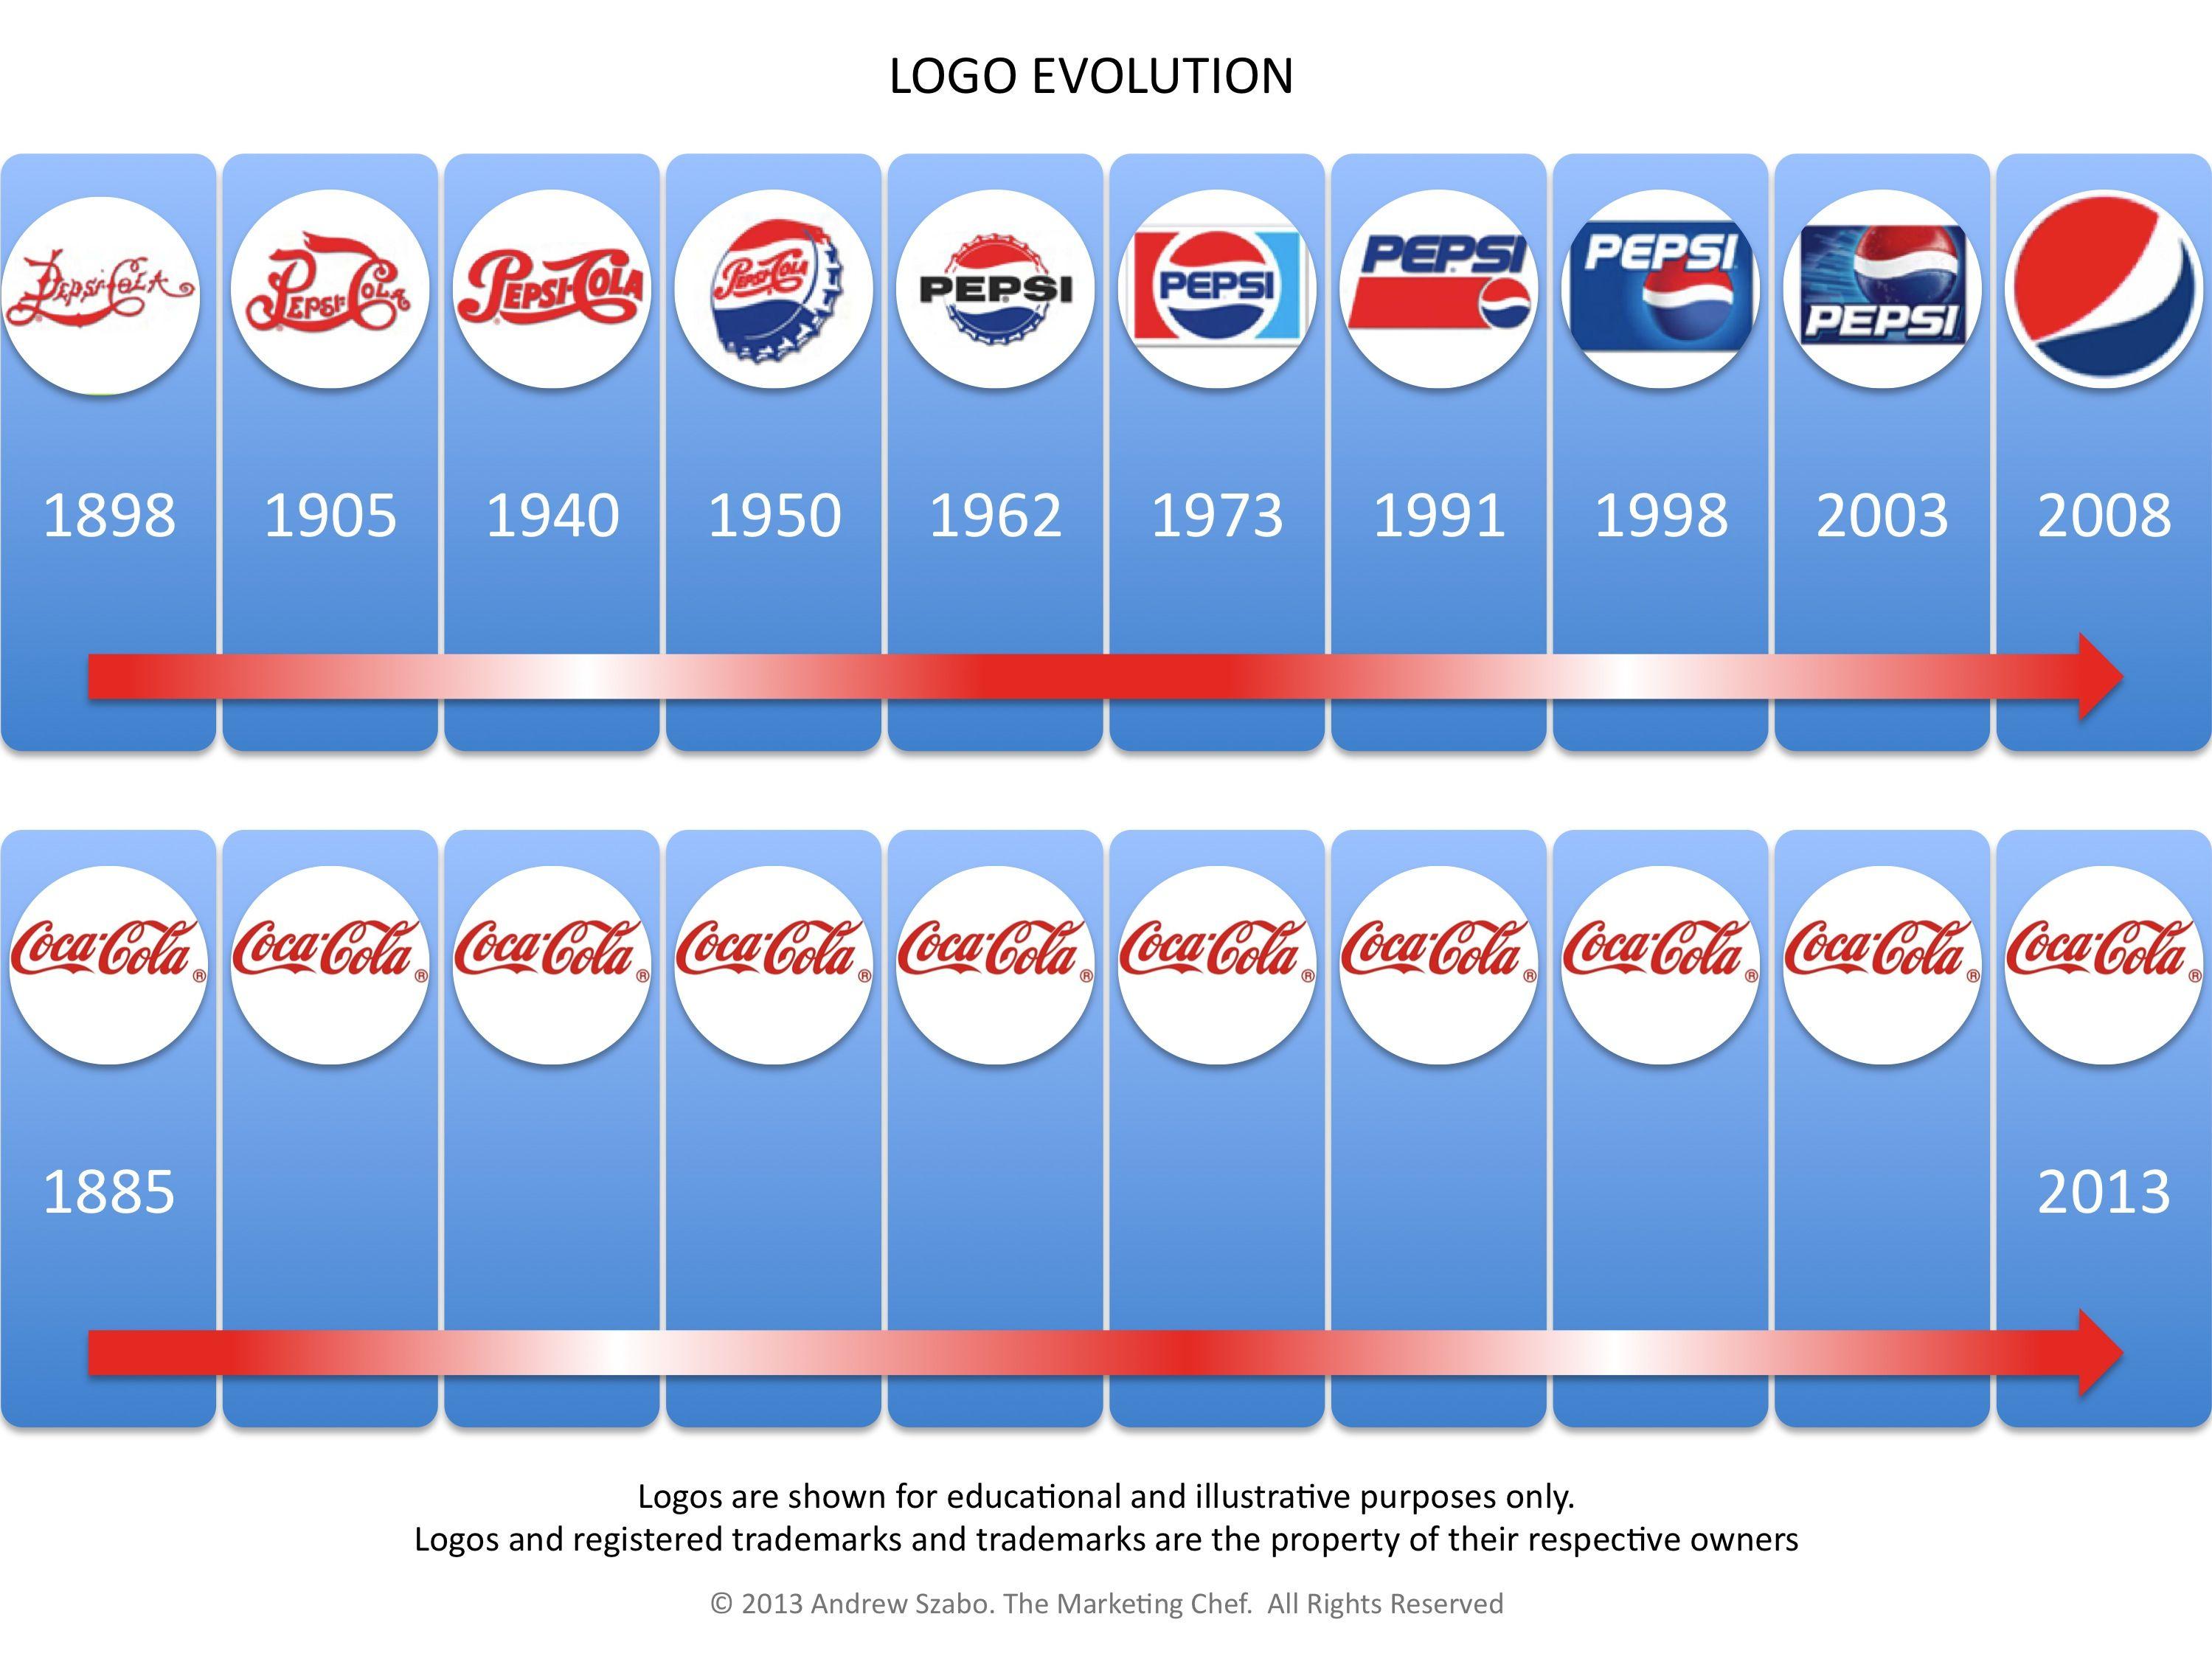 80s Pepsi Logo - Some famous Logos Then and Now : Damnthatsinteresting